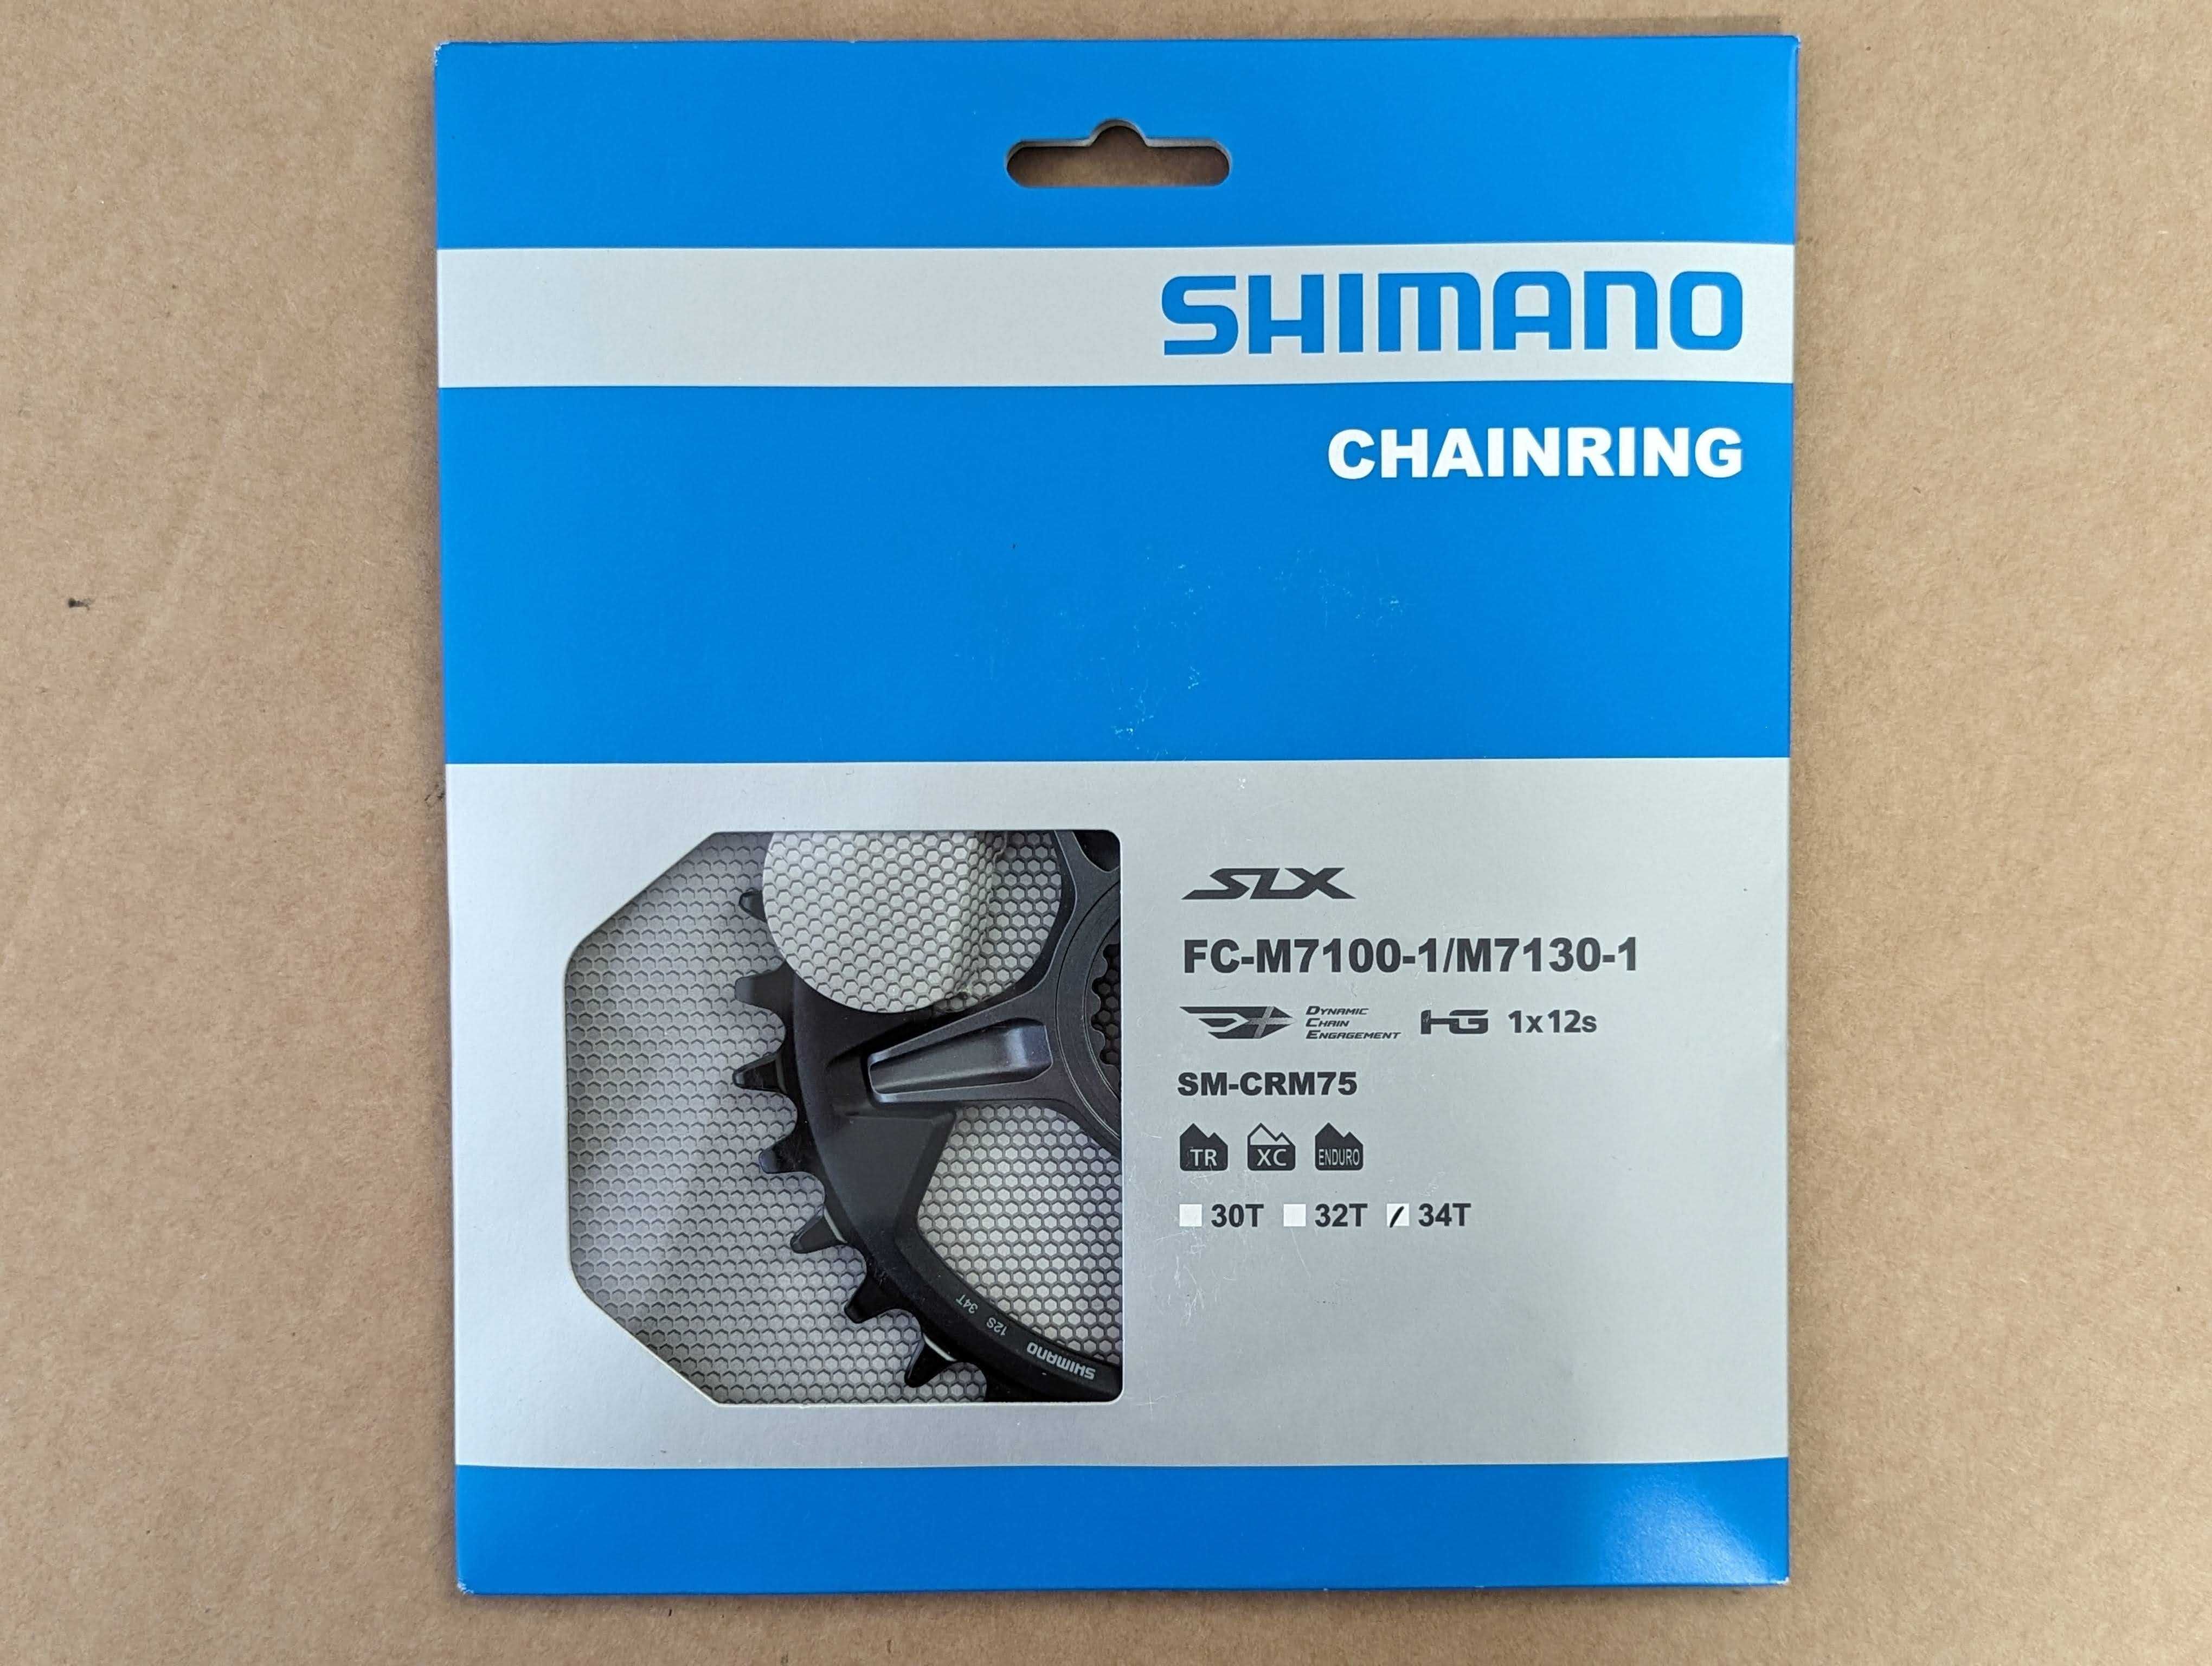 Zębatka SHIMANO SLX 34T FC-M7100/M7130 1x12S SM-CRM75